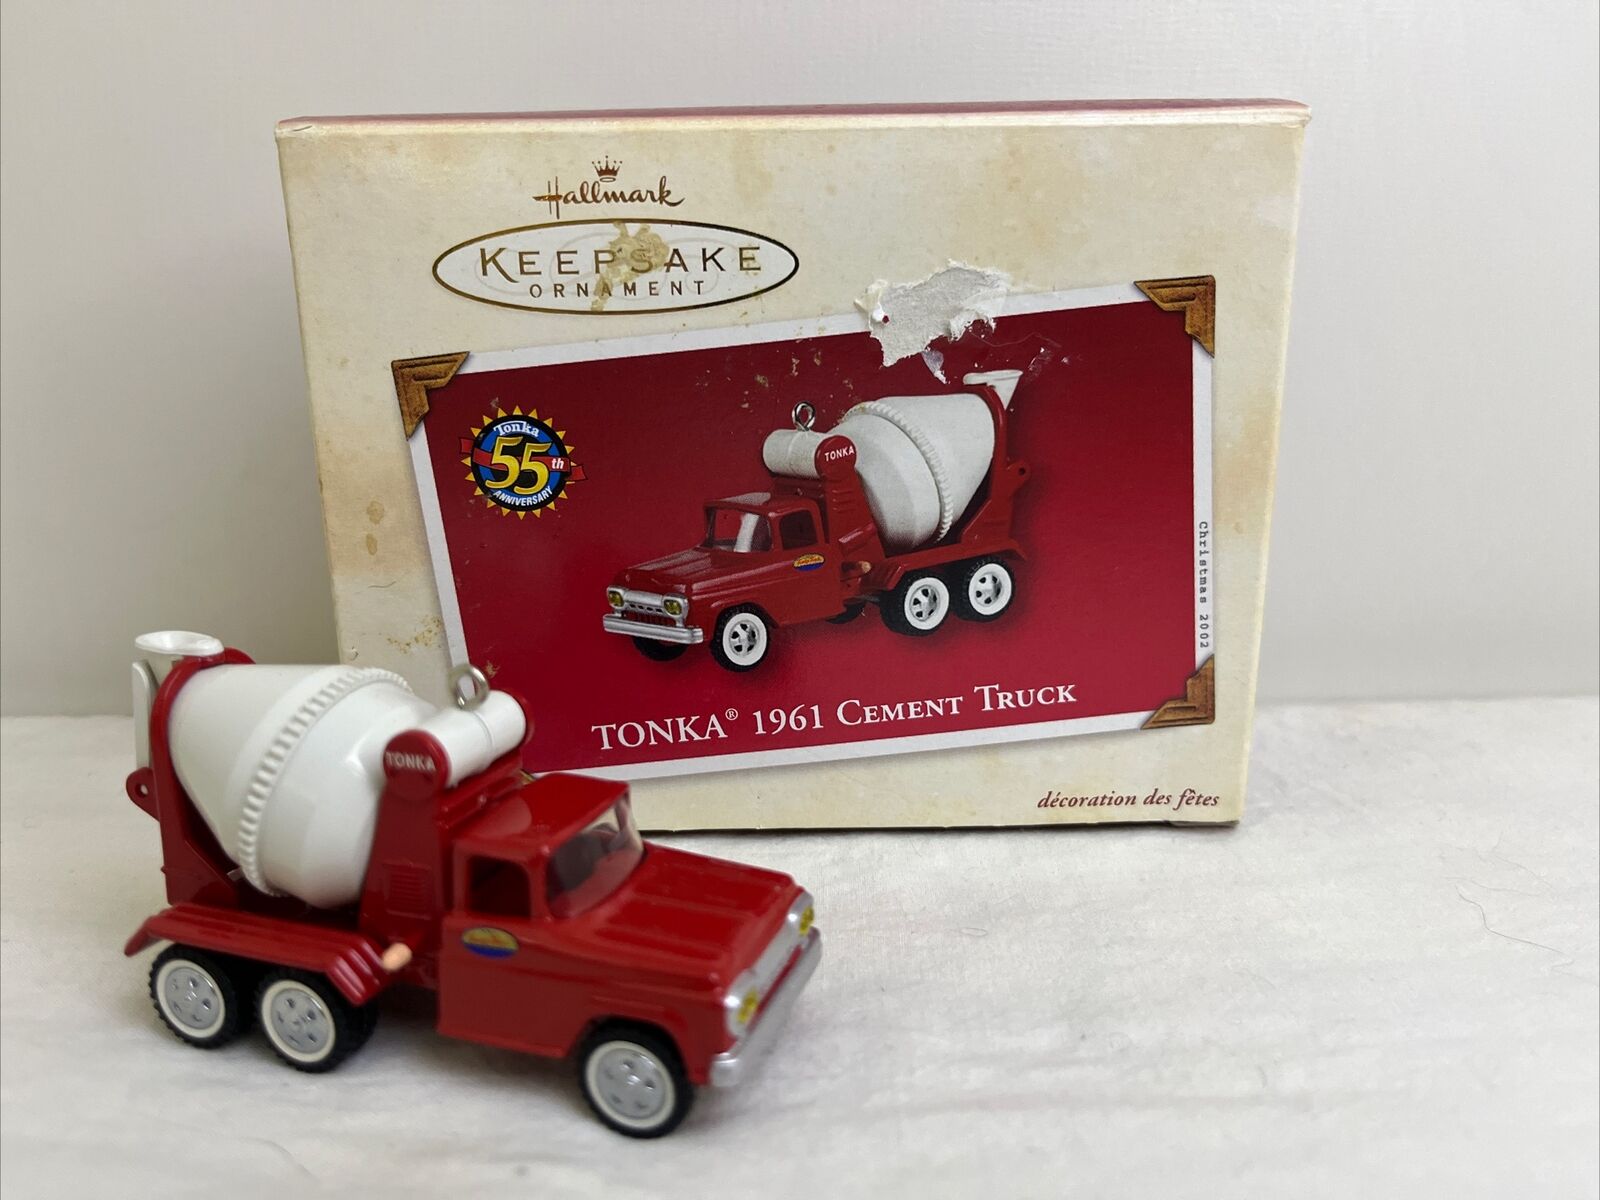 Hallmark Keepsake Ornament Tonka 1961 Cement Truck Red White 2002